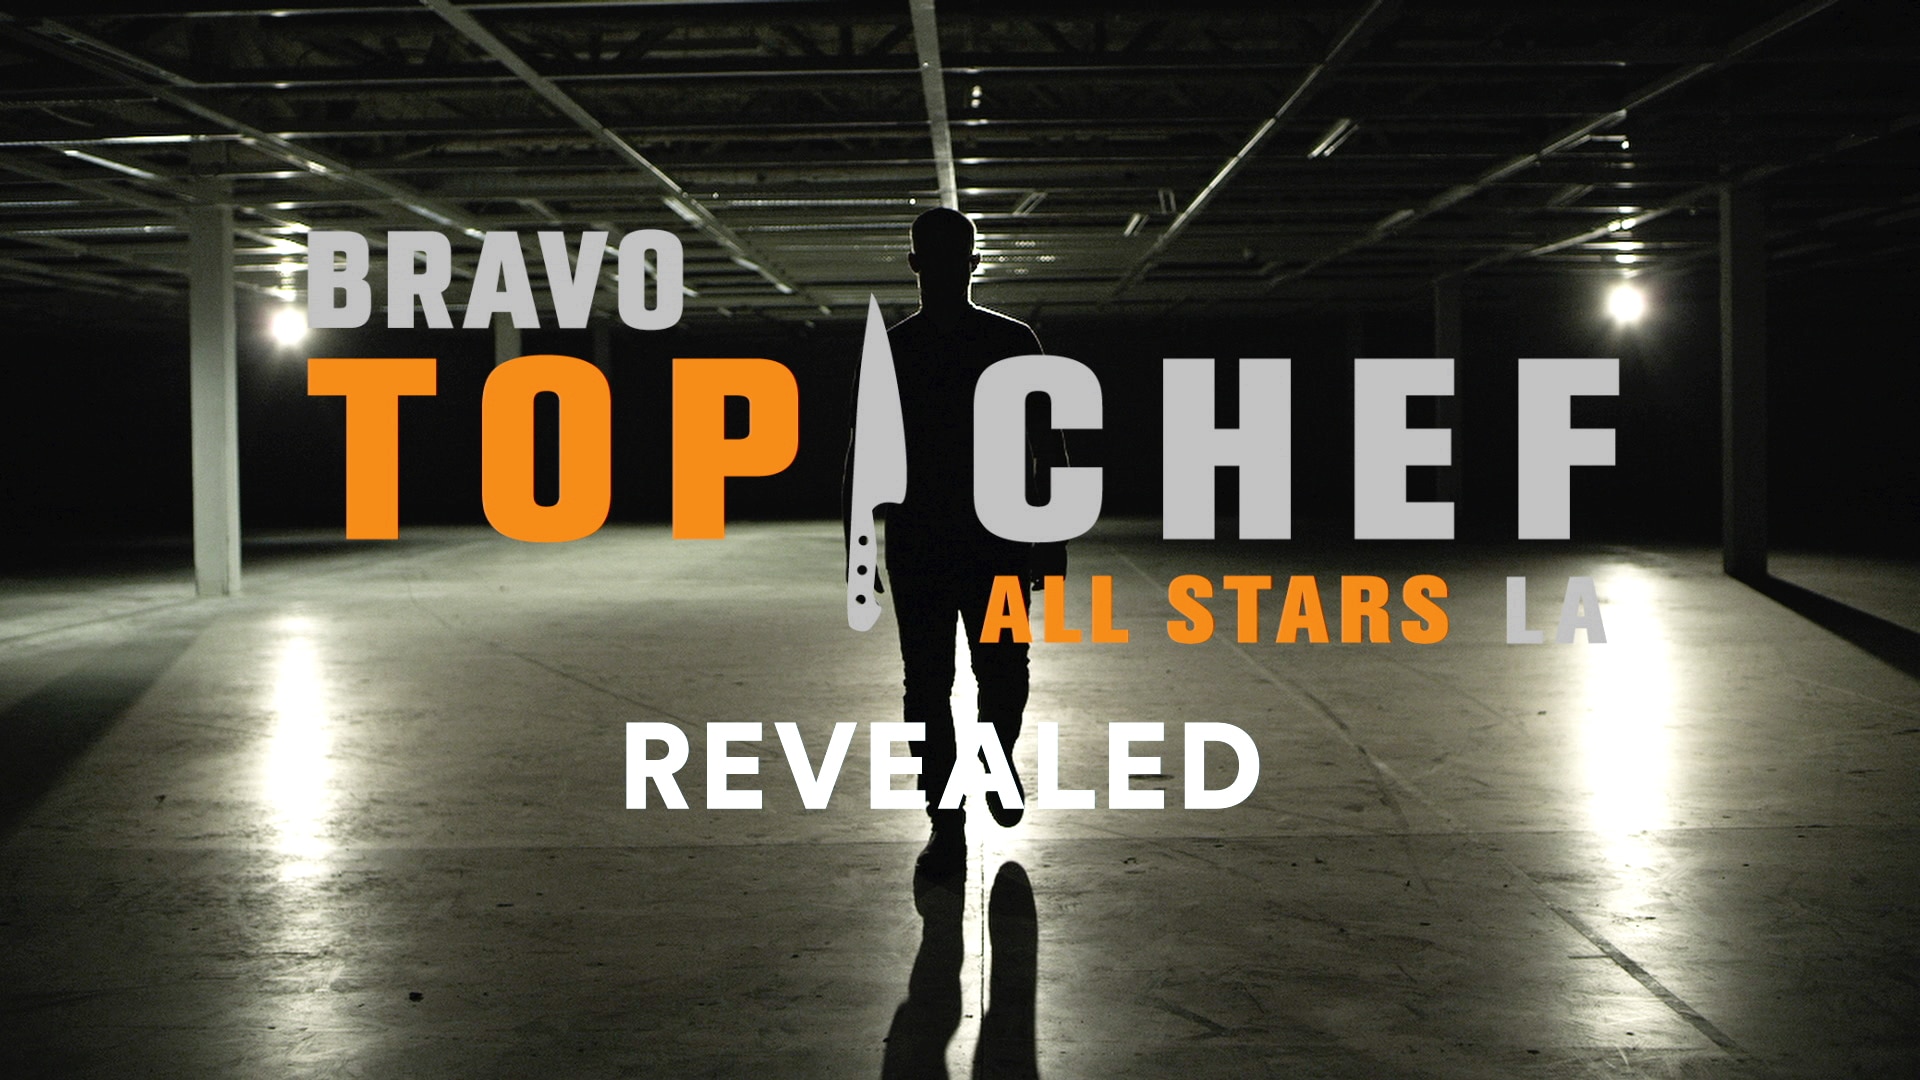 Introducing Bravo's Top Chef Season 17 All Stars!